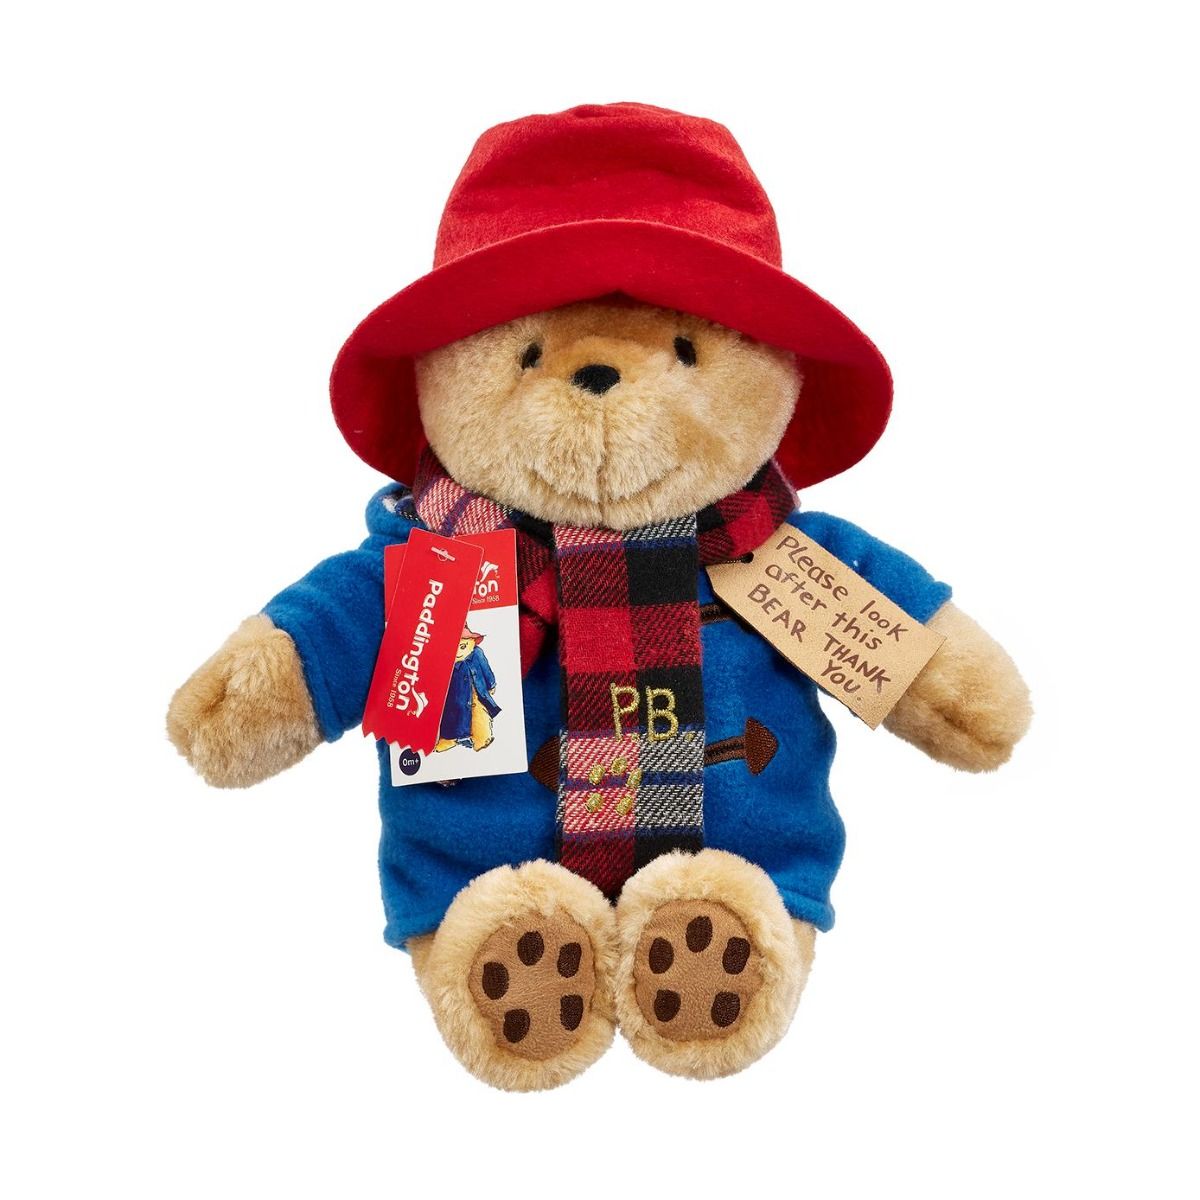 Cuddly Paddington Bear with scarf Plush 23cm by Rainbow Designs PA1492 